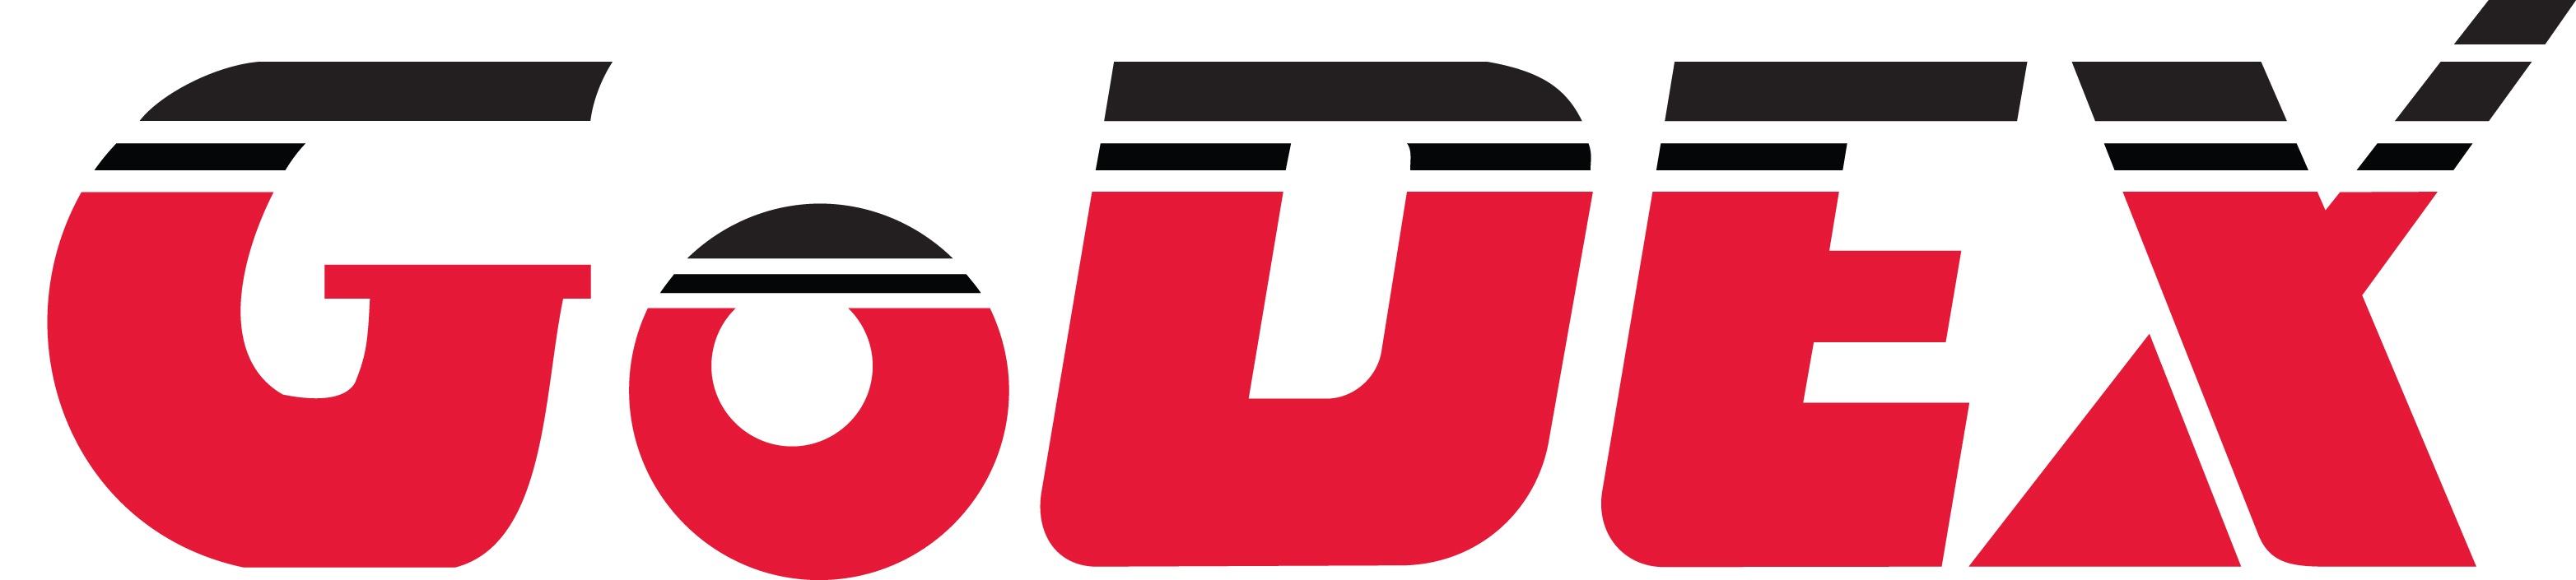 GoDex-logo